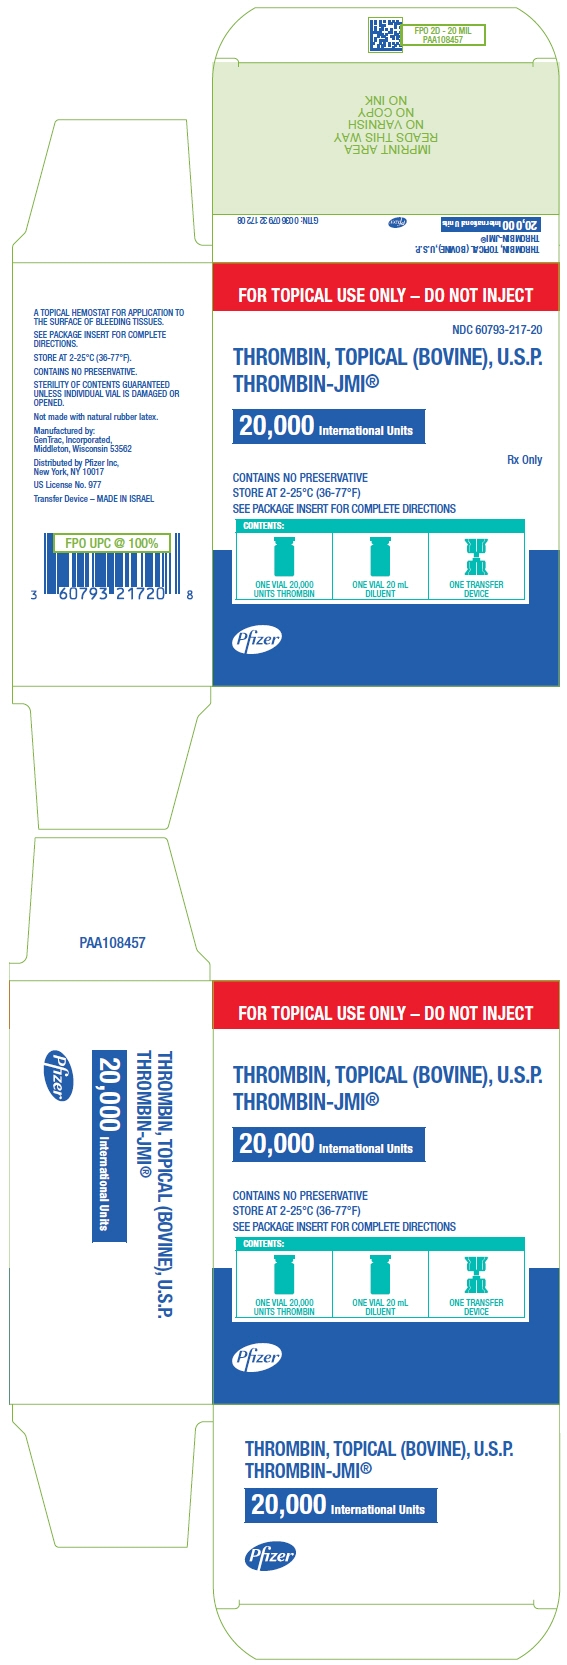 PRINCIPAL DISPLAY PANEL - 20 mL Vial Label